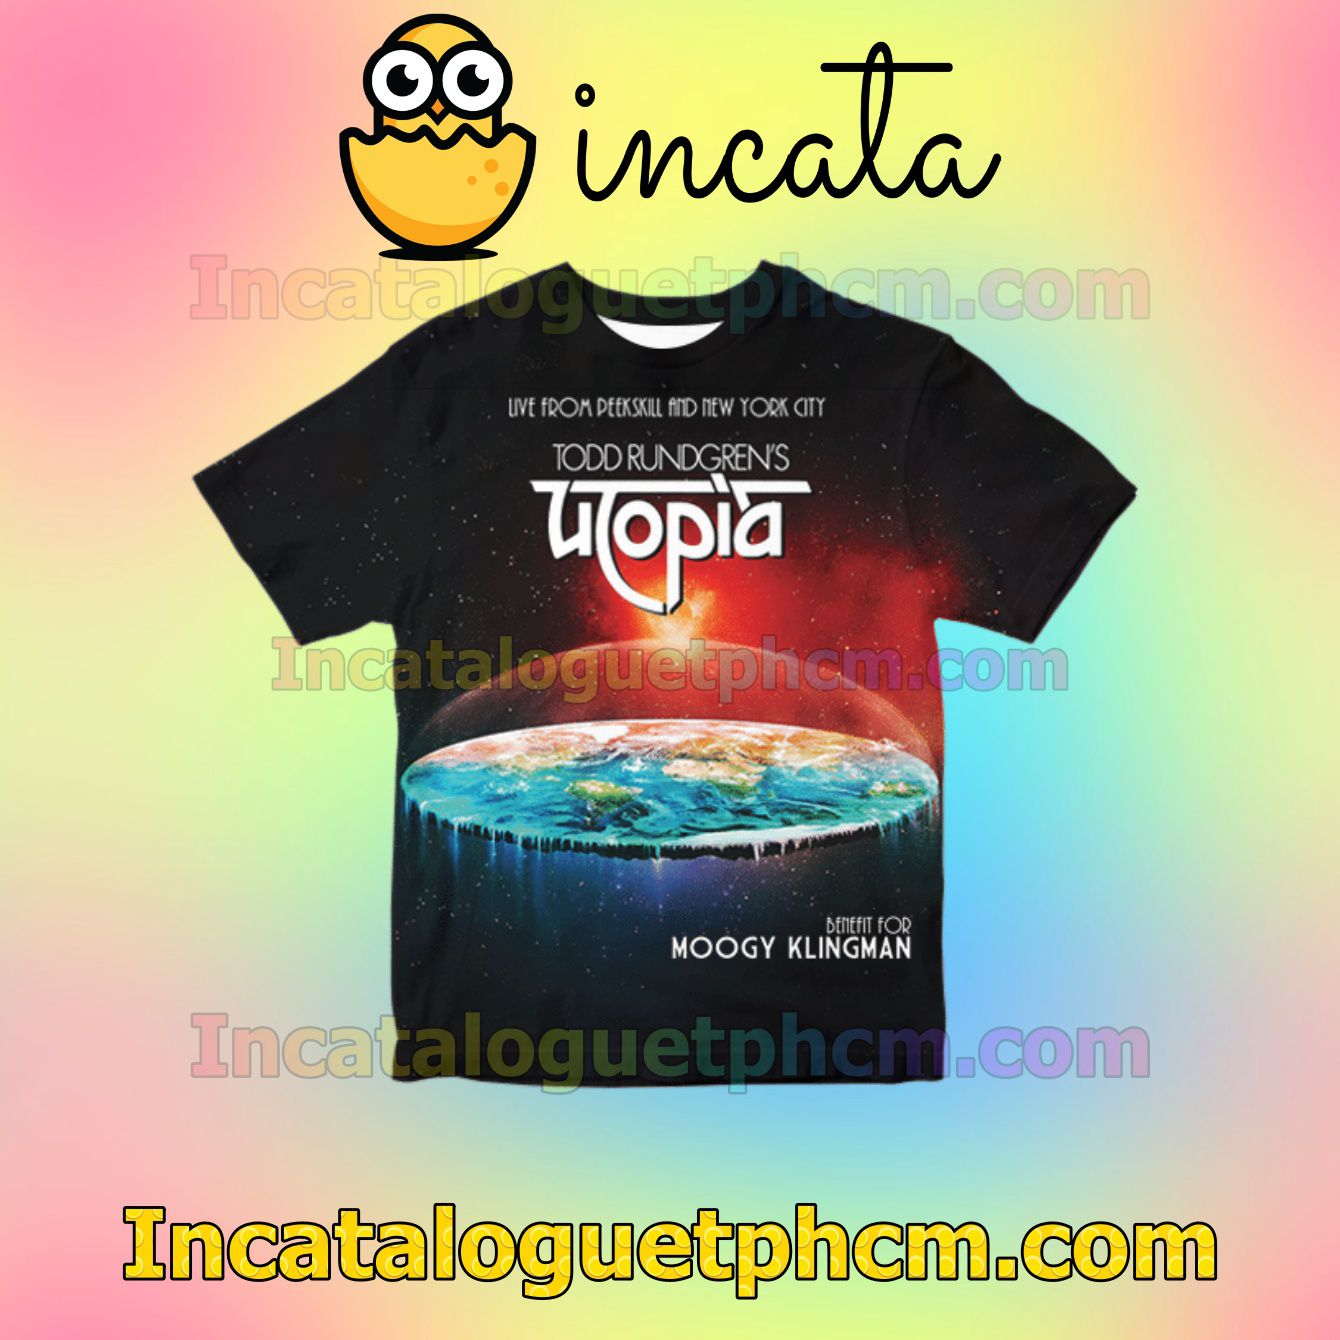 Todd Rundgren's Utopia Benefit For Moogy Klingman Album Cover For Fan Personalized T-Shirt